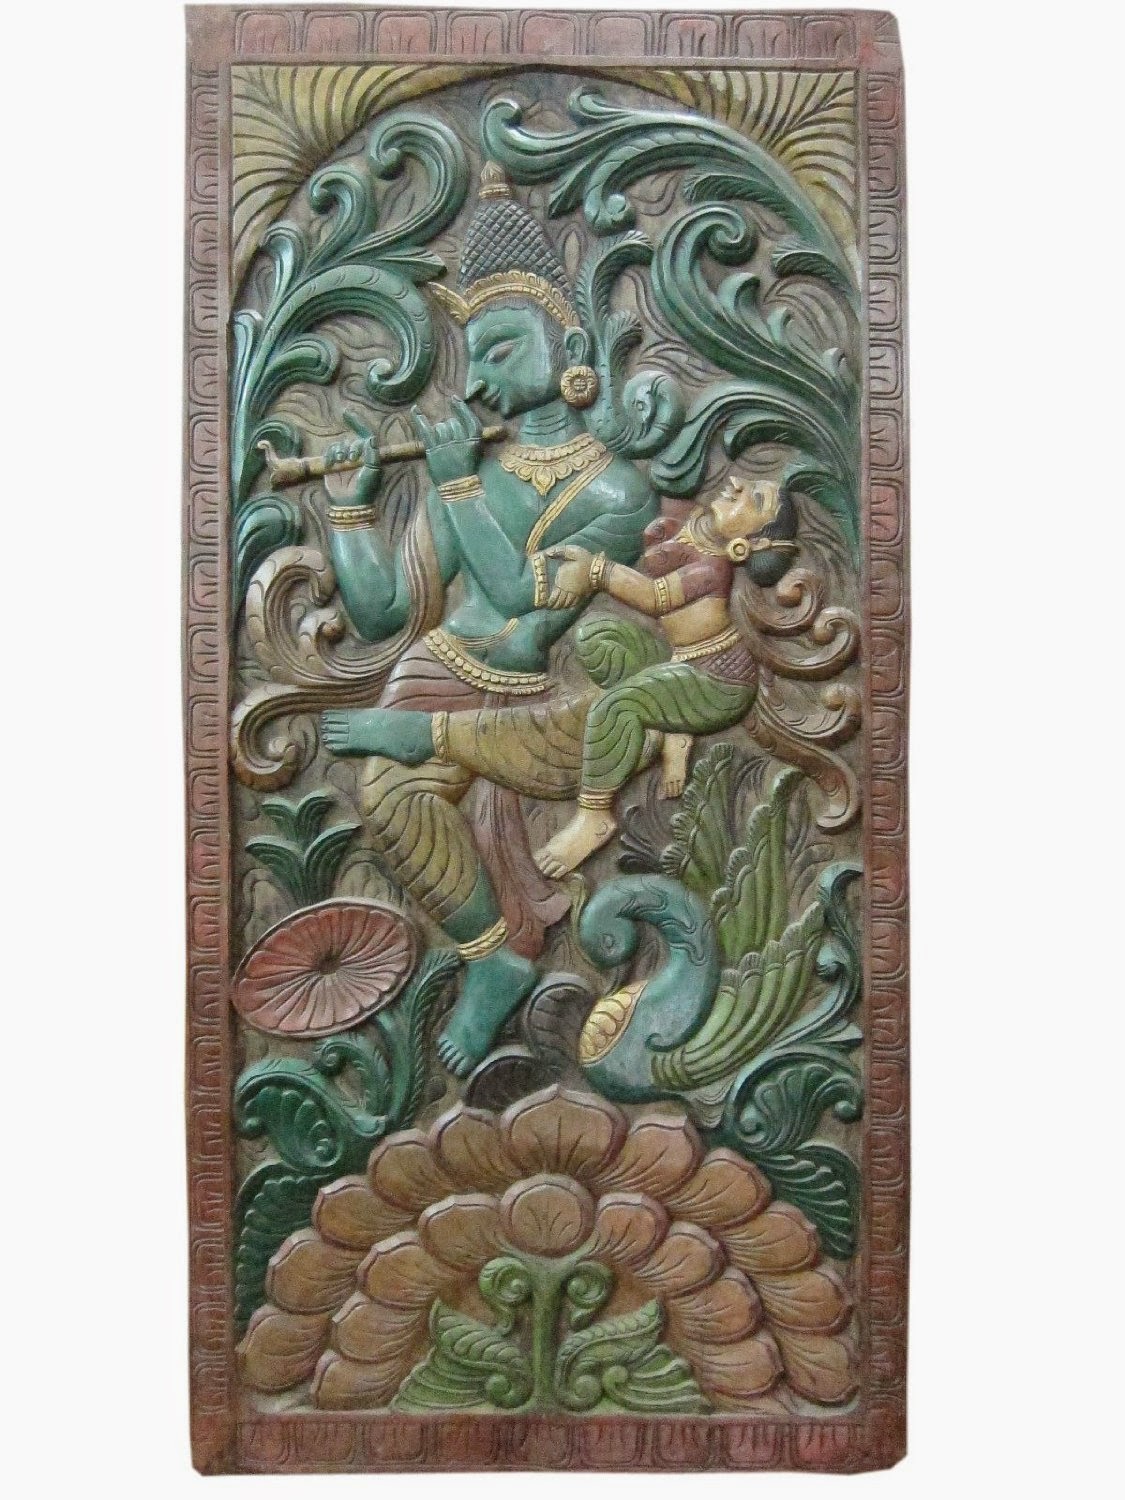 http://www.amazon.com/Carved-Radha-Krishna-Eternal-Lovers/dp/B00UKWIBI6/ref=sr_1_68?m=A1FLPADQPBV8TK&s=merchant-items&ie=UTF8&qid=1428492347&sr=1-68&keywords=carved+panel